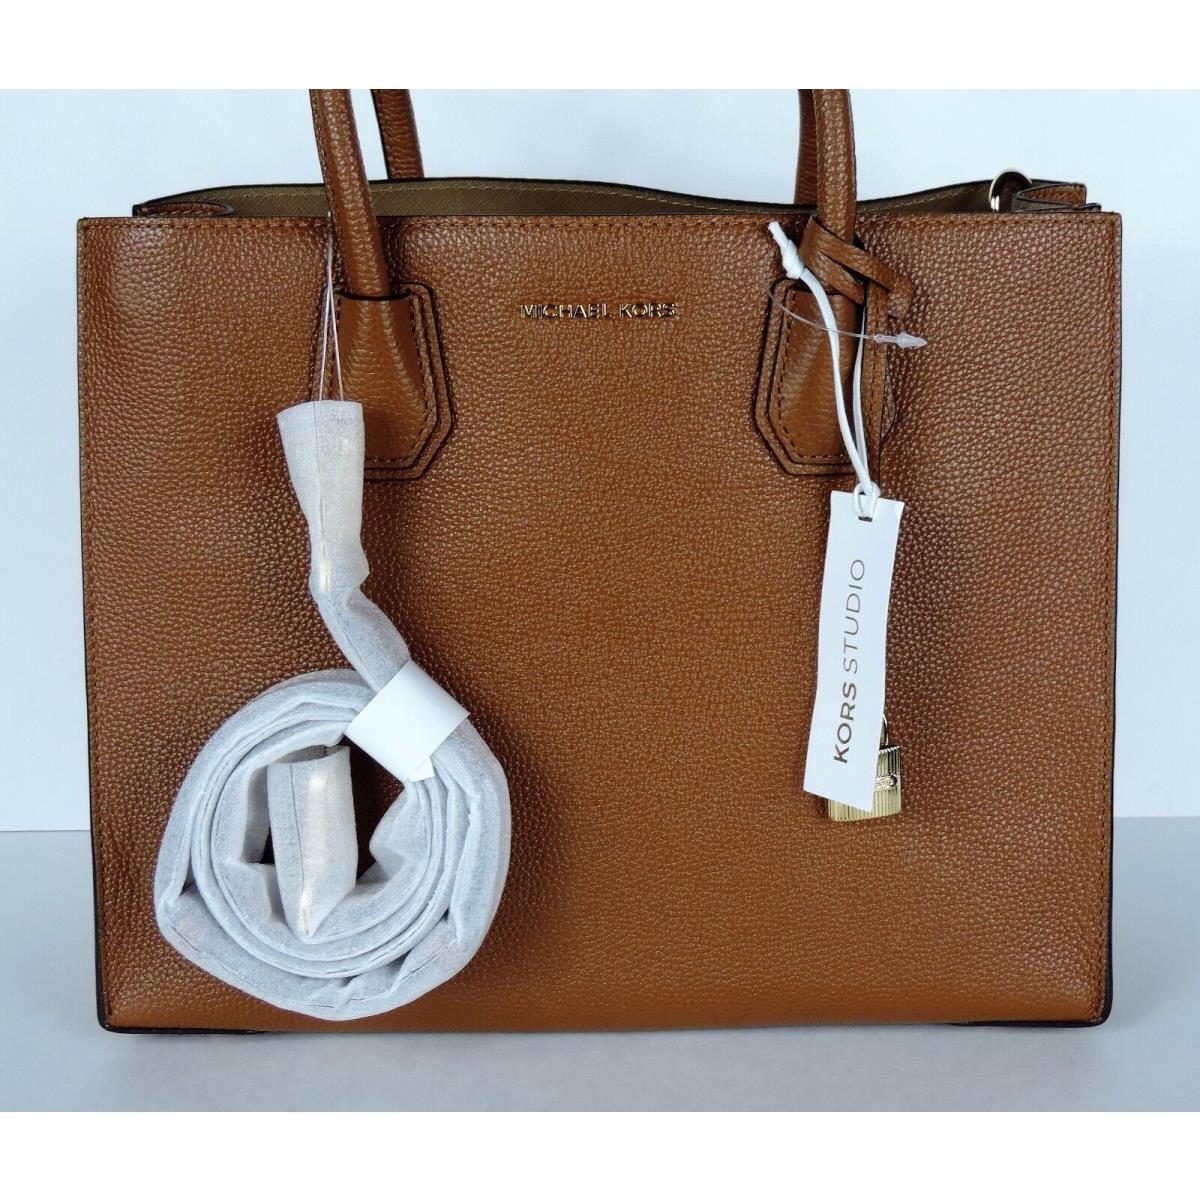 Michael Kors Mercer Large Studio Convertible Leather Bag Luggage Tote Gold